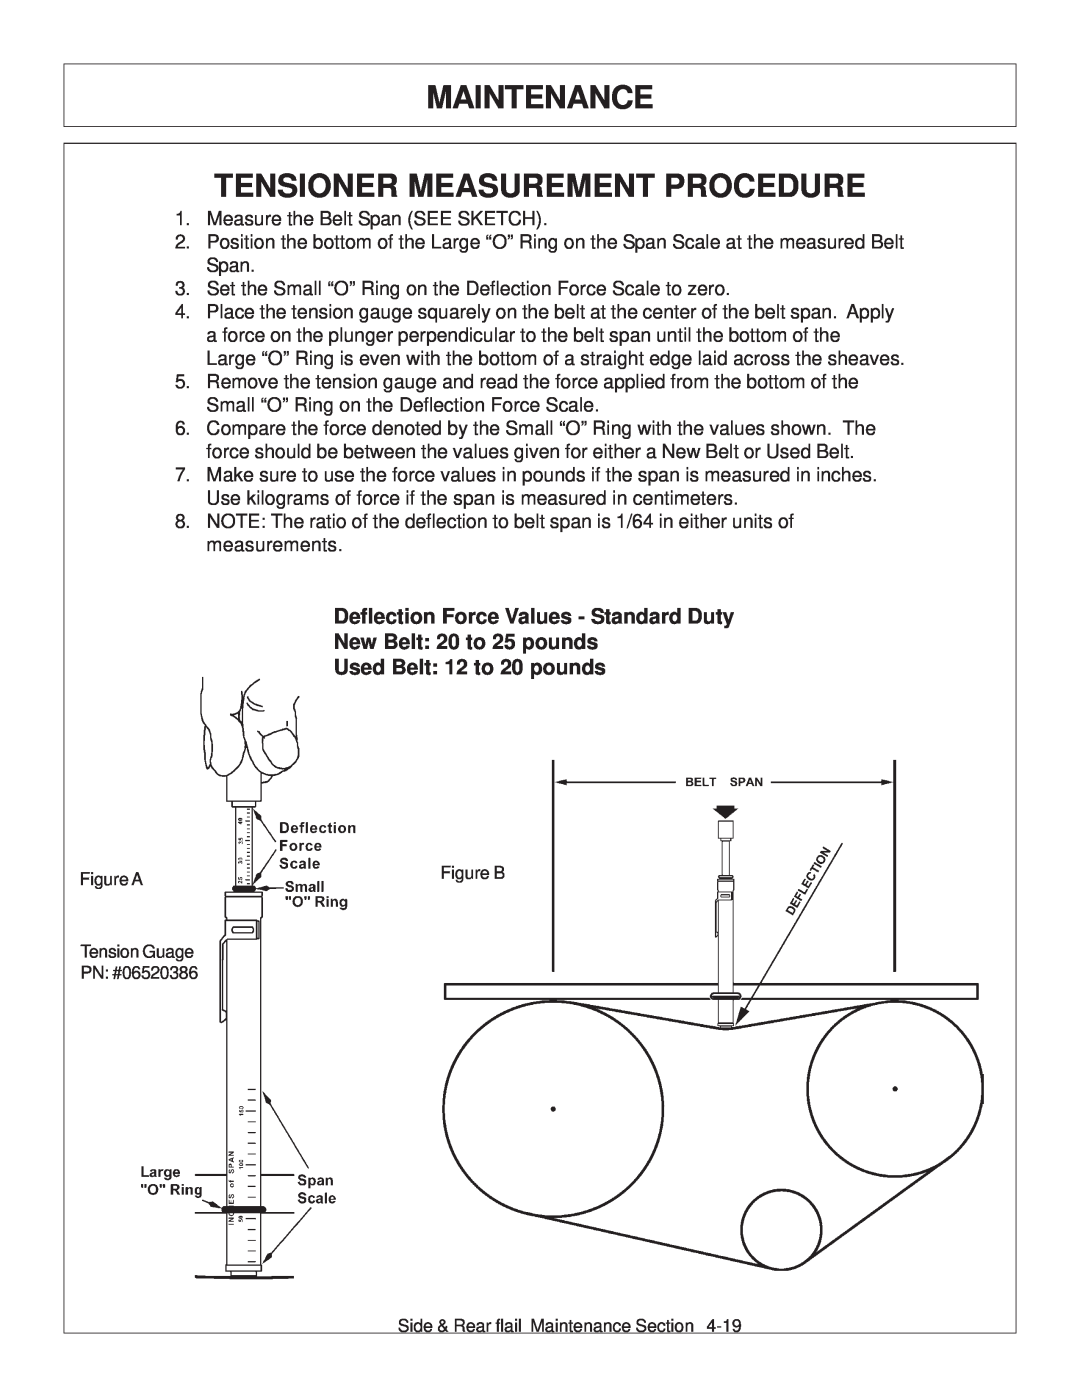 Tiger JD 5093E, JD 5083E, JD 5101E manual Maintenance Tensioner Measurement Procedure, Used Belt 12 to 20 pounds 